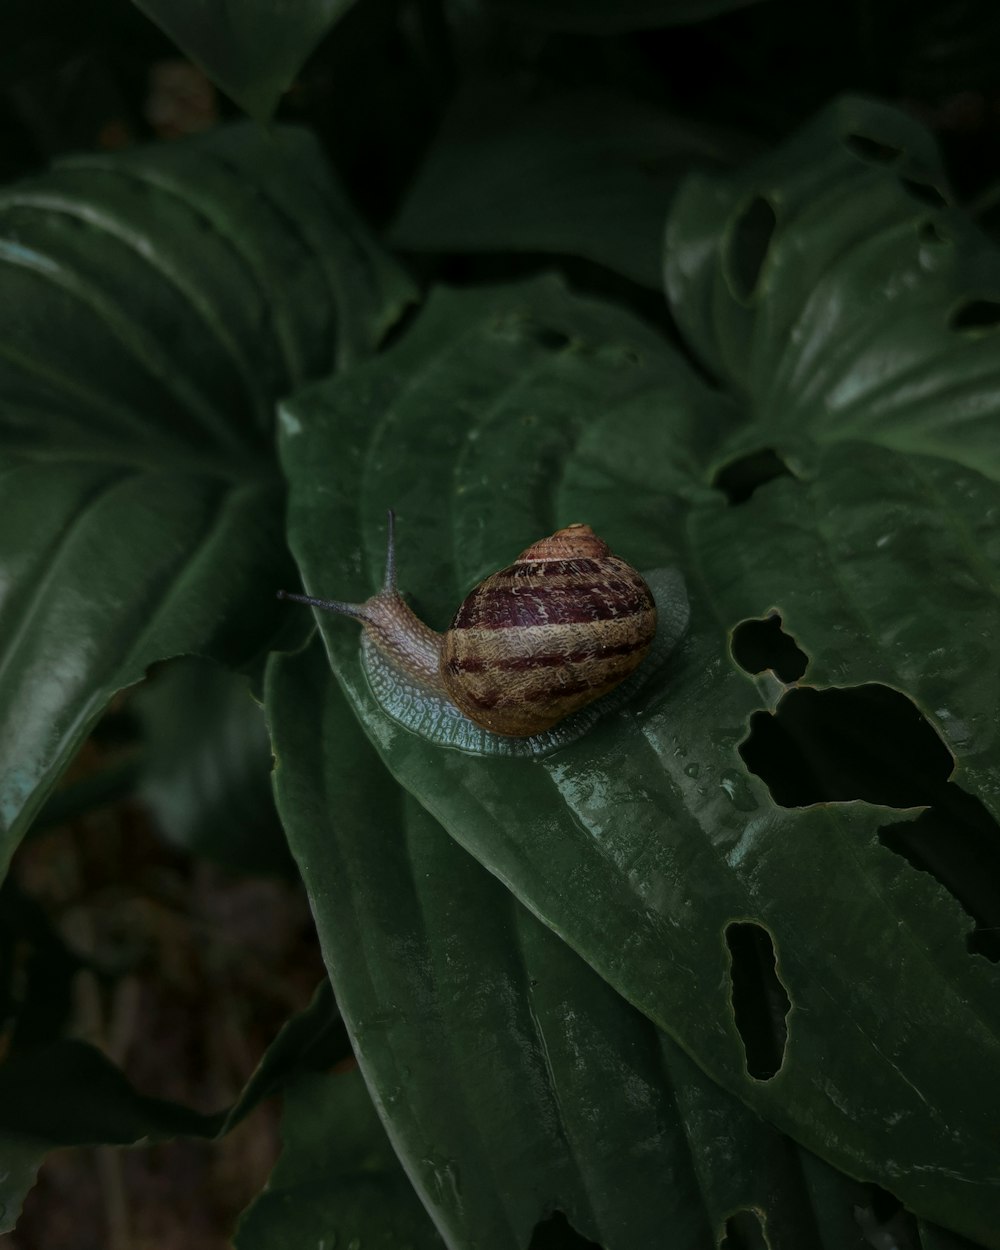 a snail is sitting on a green leaf